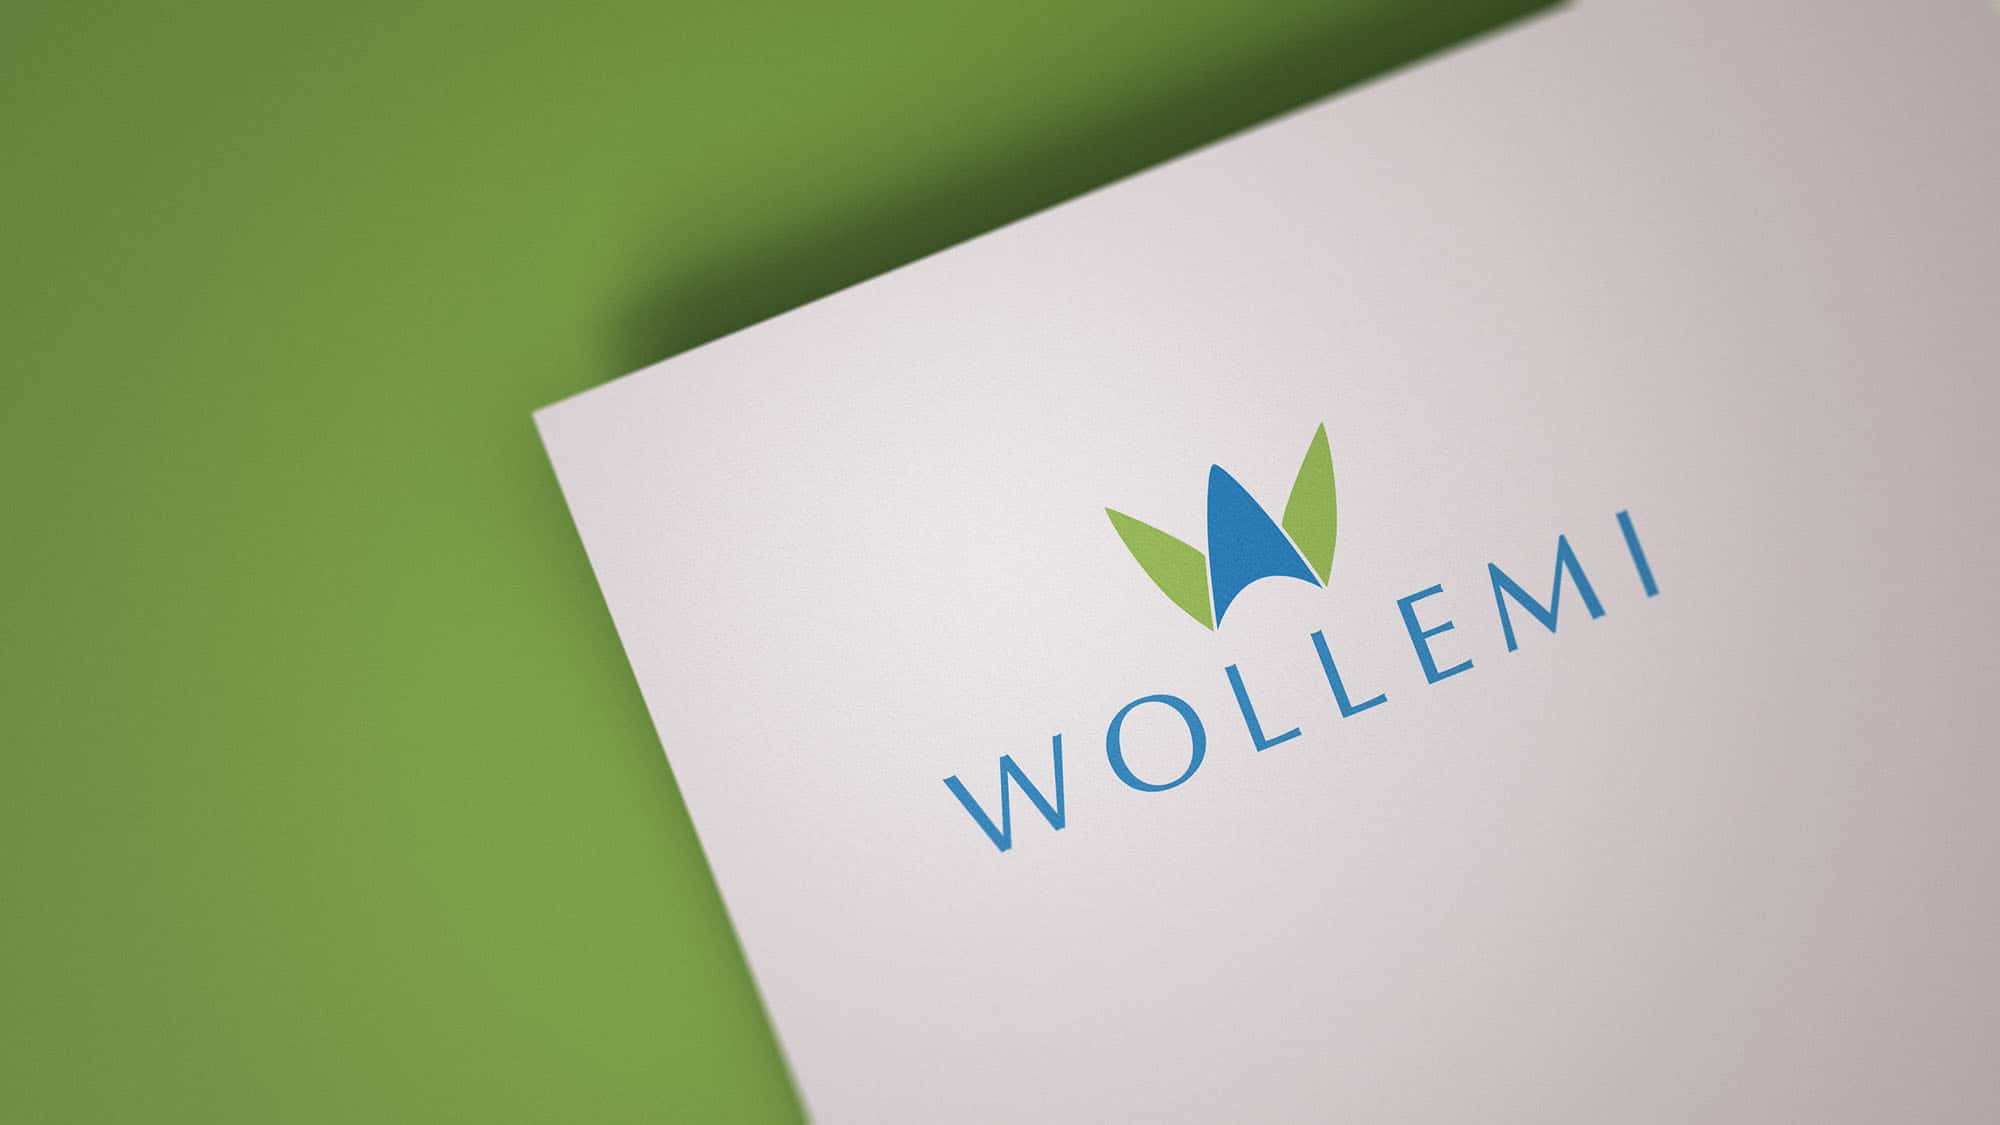 Wollemi - Logo and website design by Studio Exalt